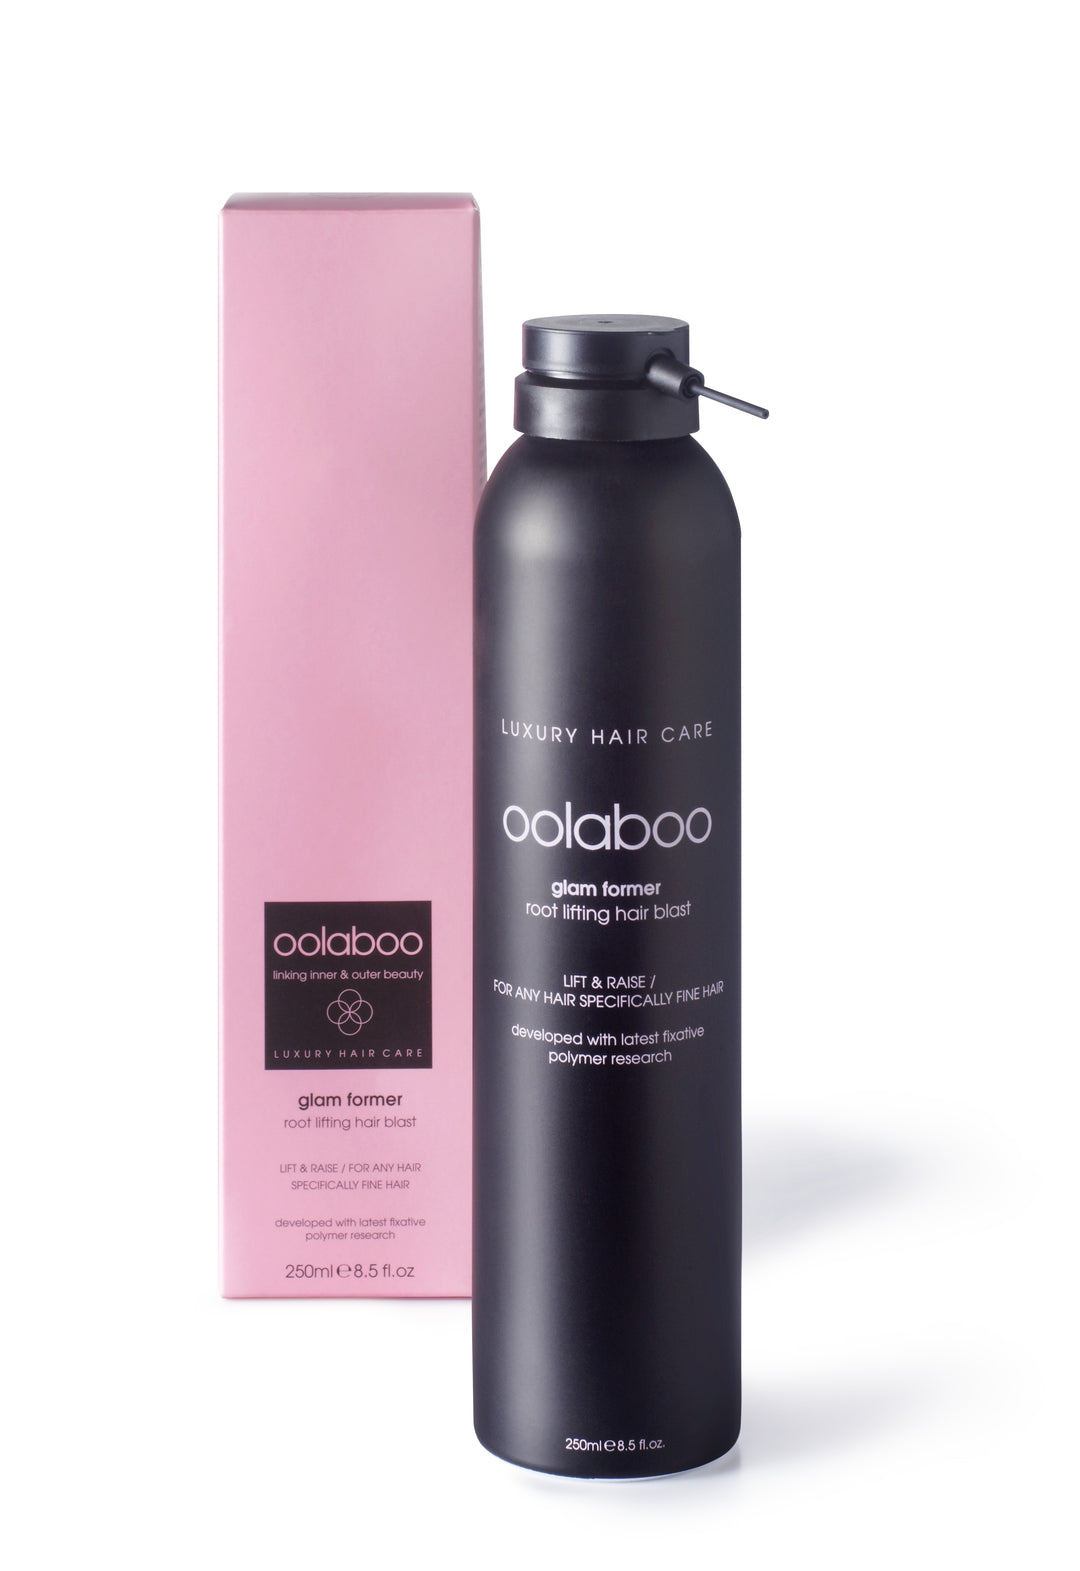 Oolaboo Glam Former Root Lifting Hair Blast 250 ml